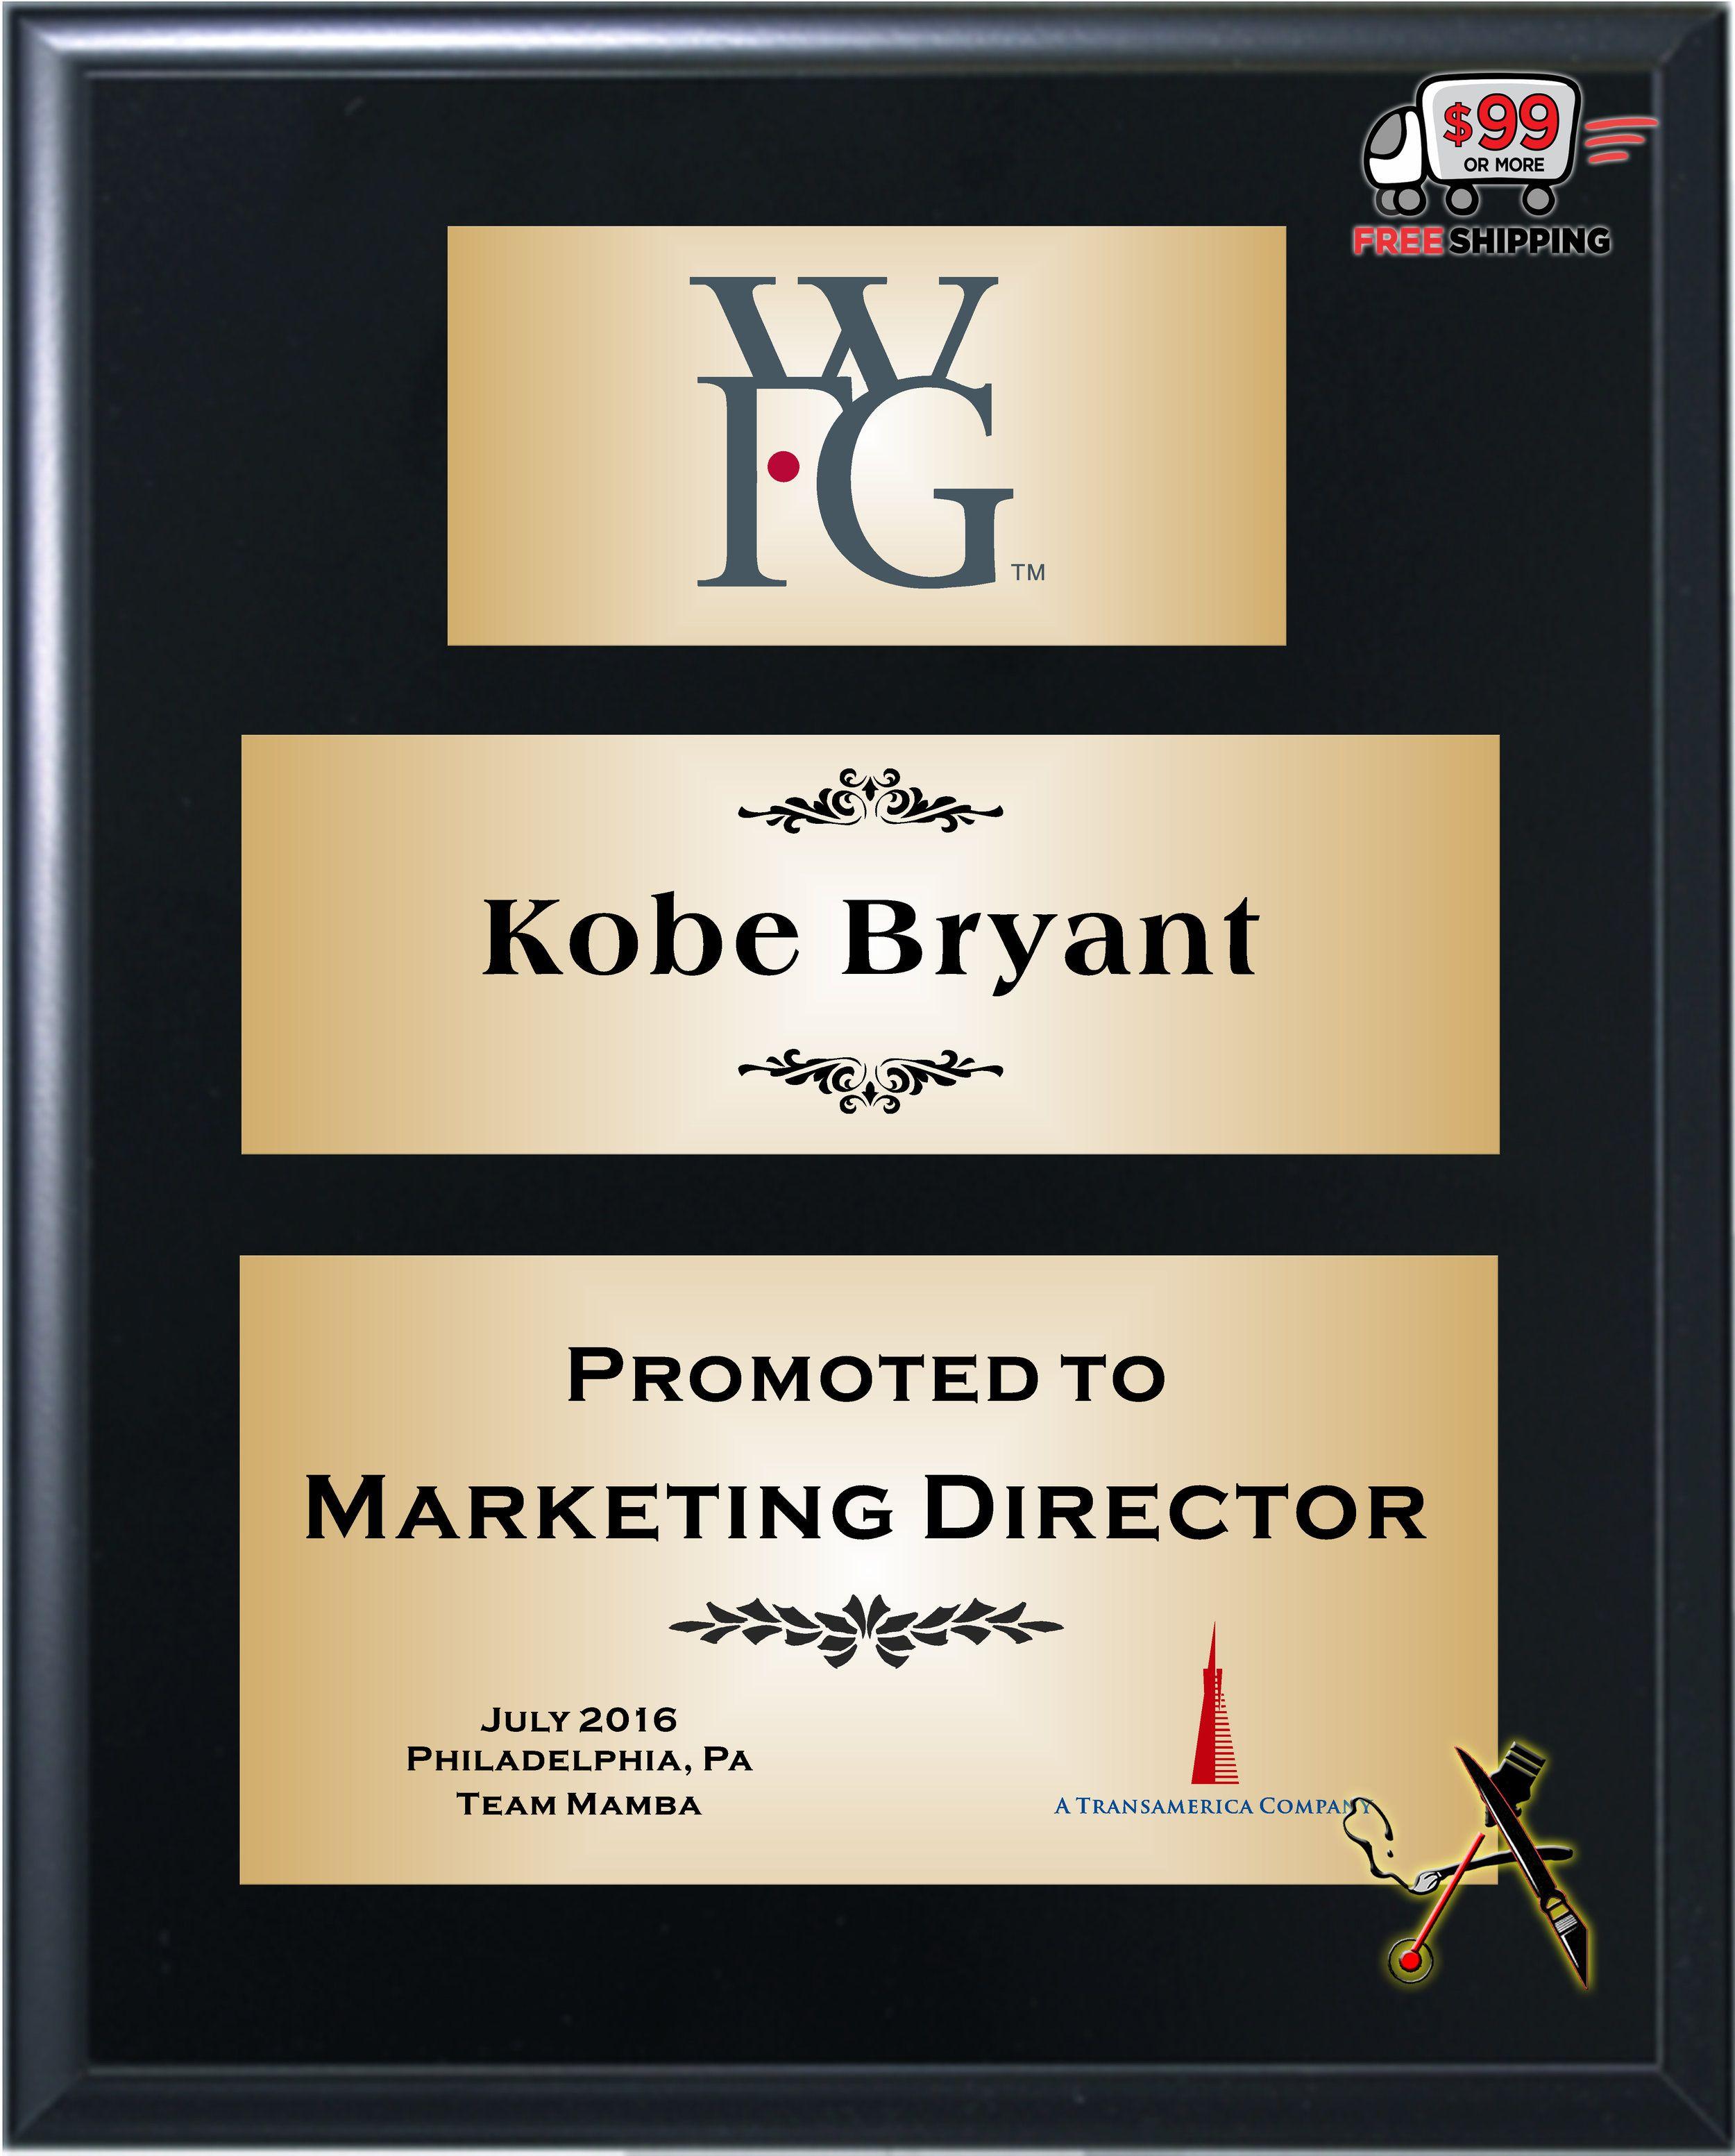 WFG Logo - WFG Marketing Director Promotion Plaque (Item# WFG-1620GBW) WFG Logo